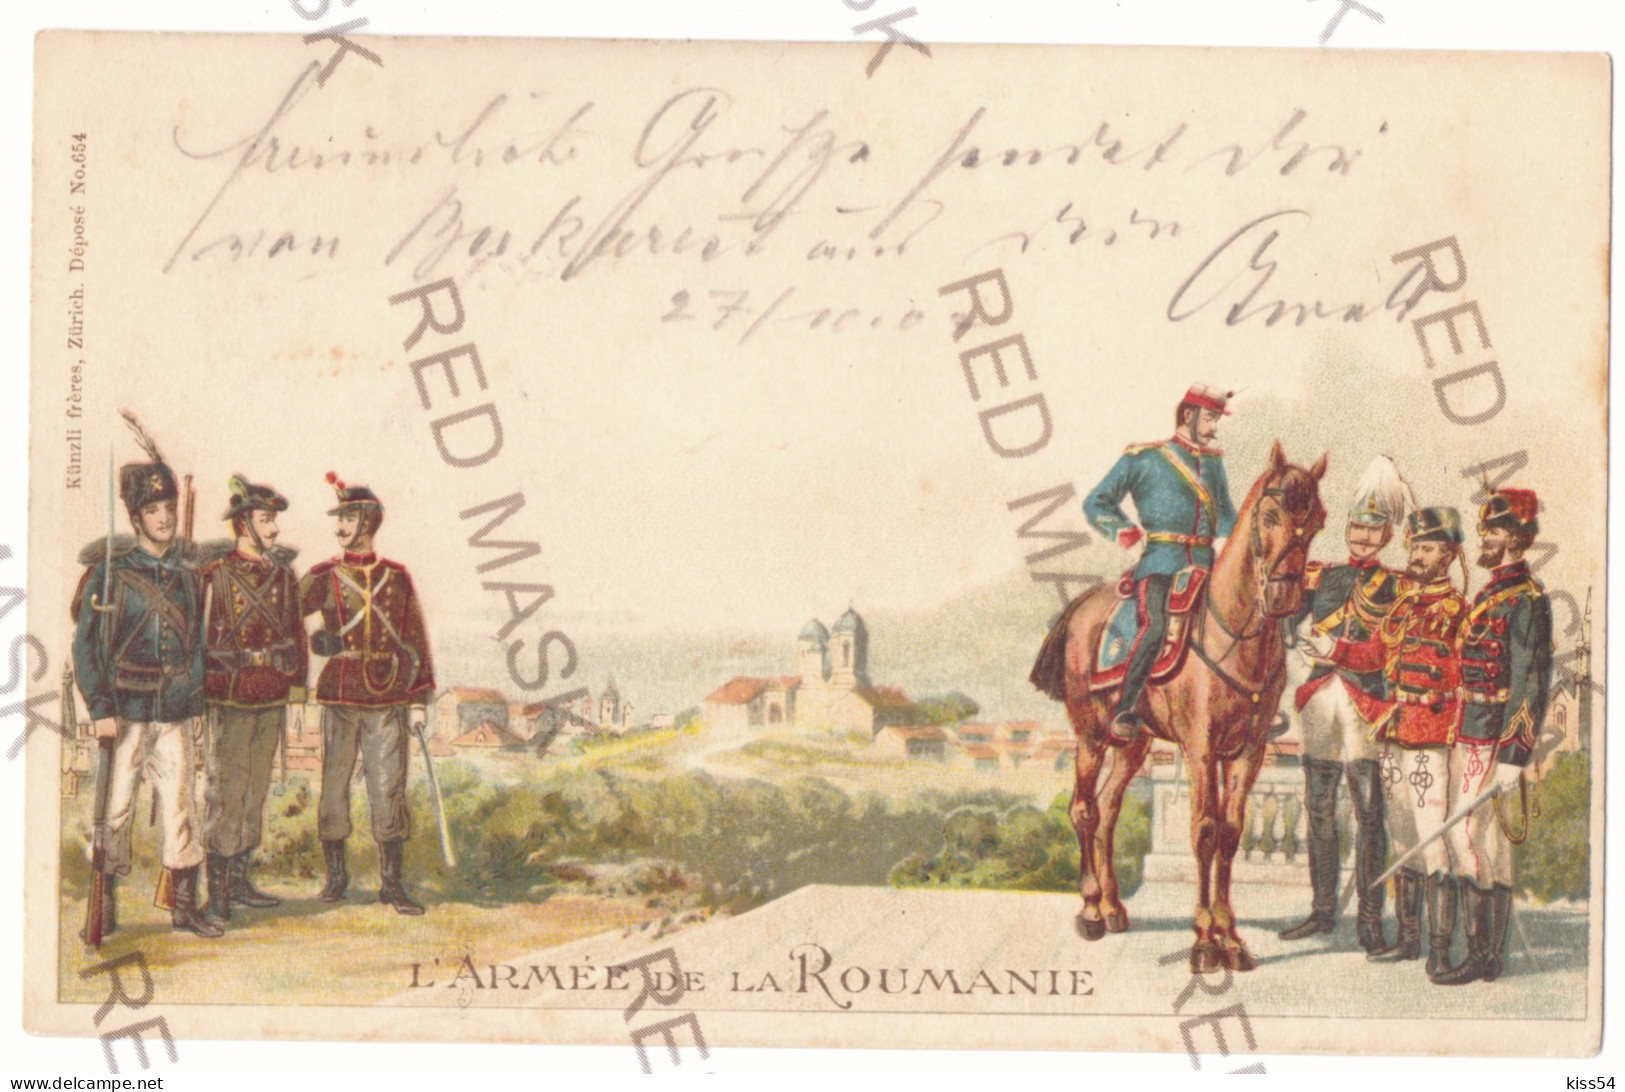 RO 69 - 18590 Romanian Army, Litho, Romania - Old Postcard - Used - 1902 - Romania